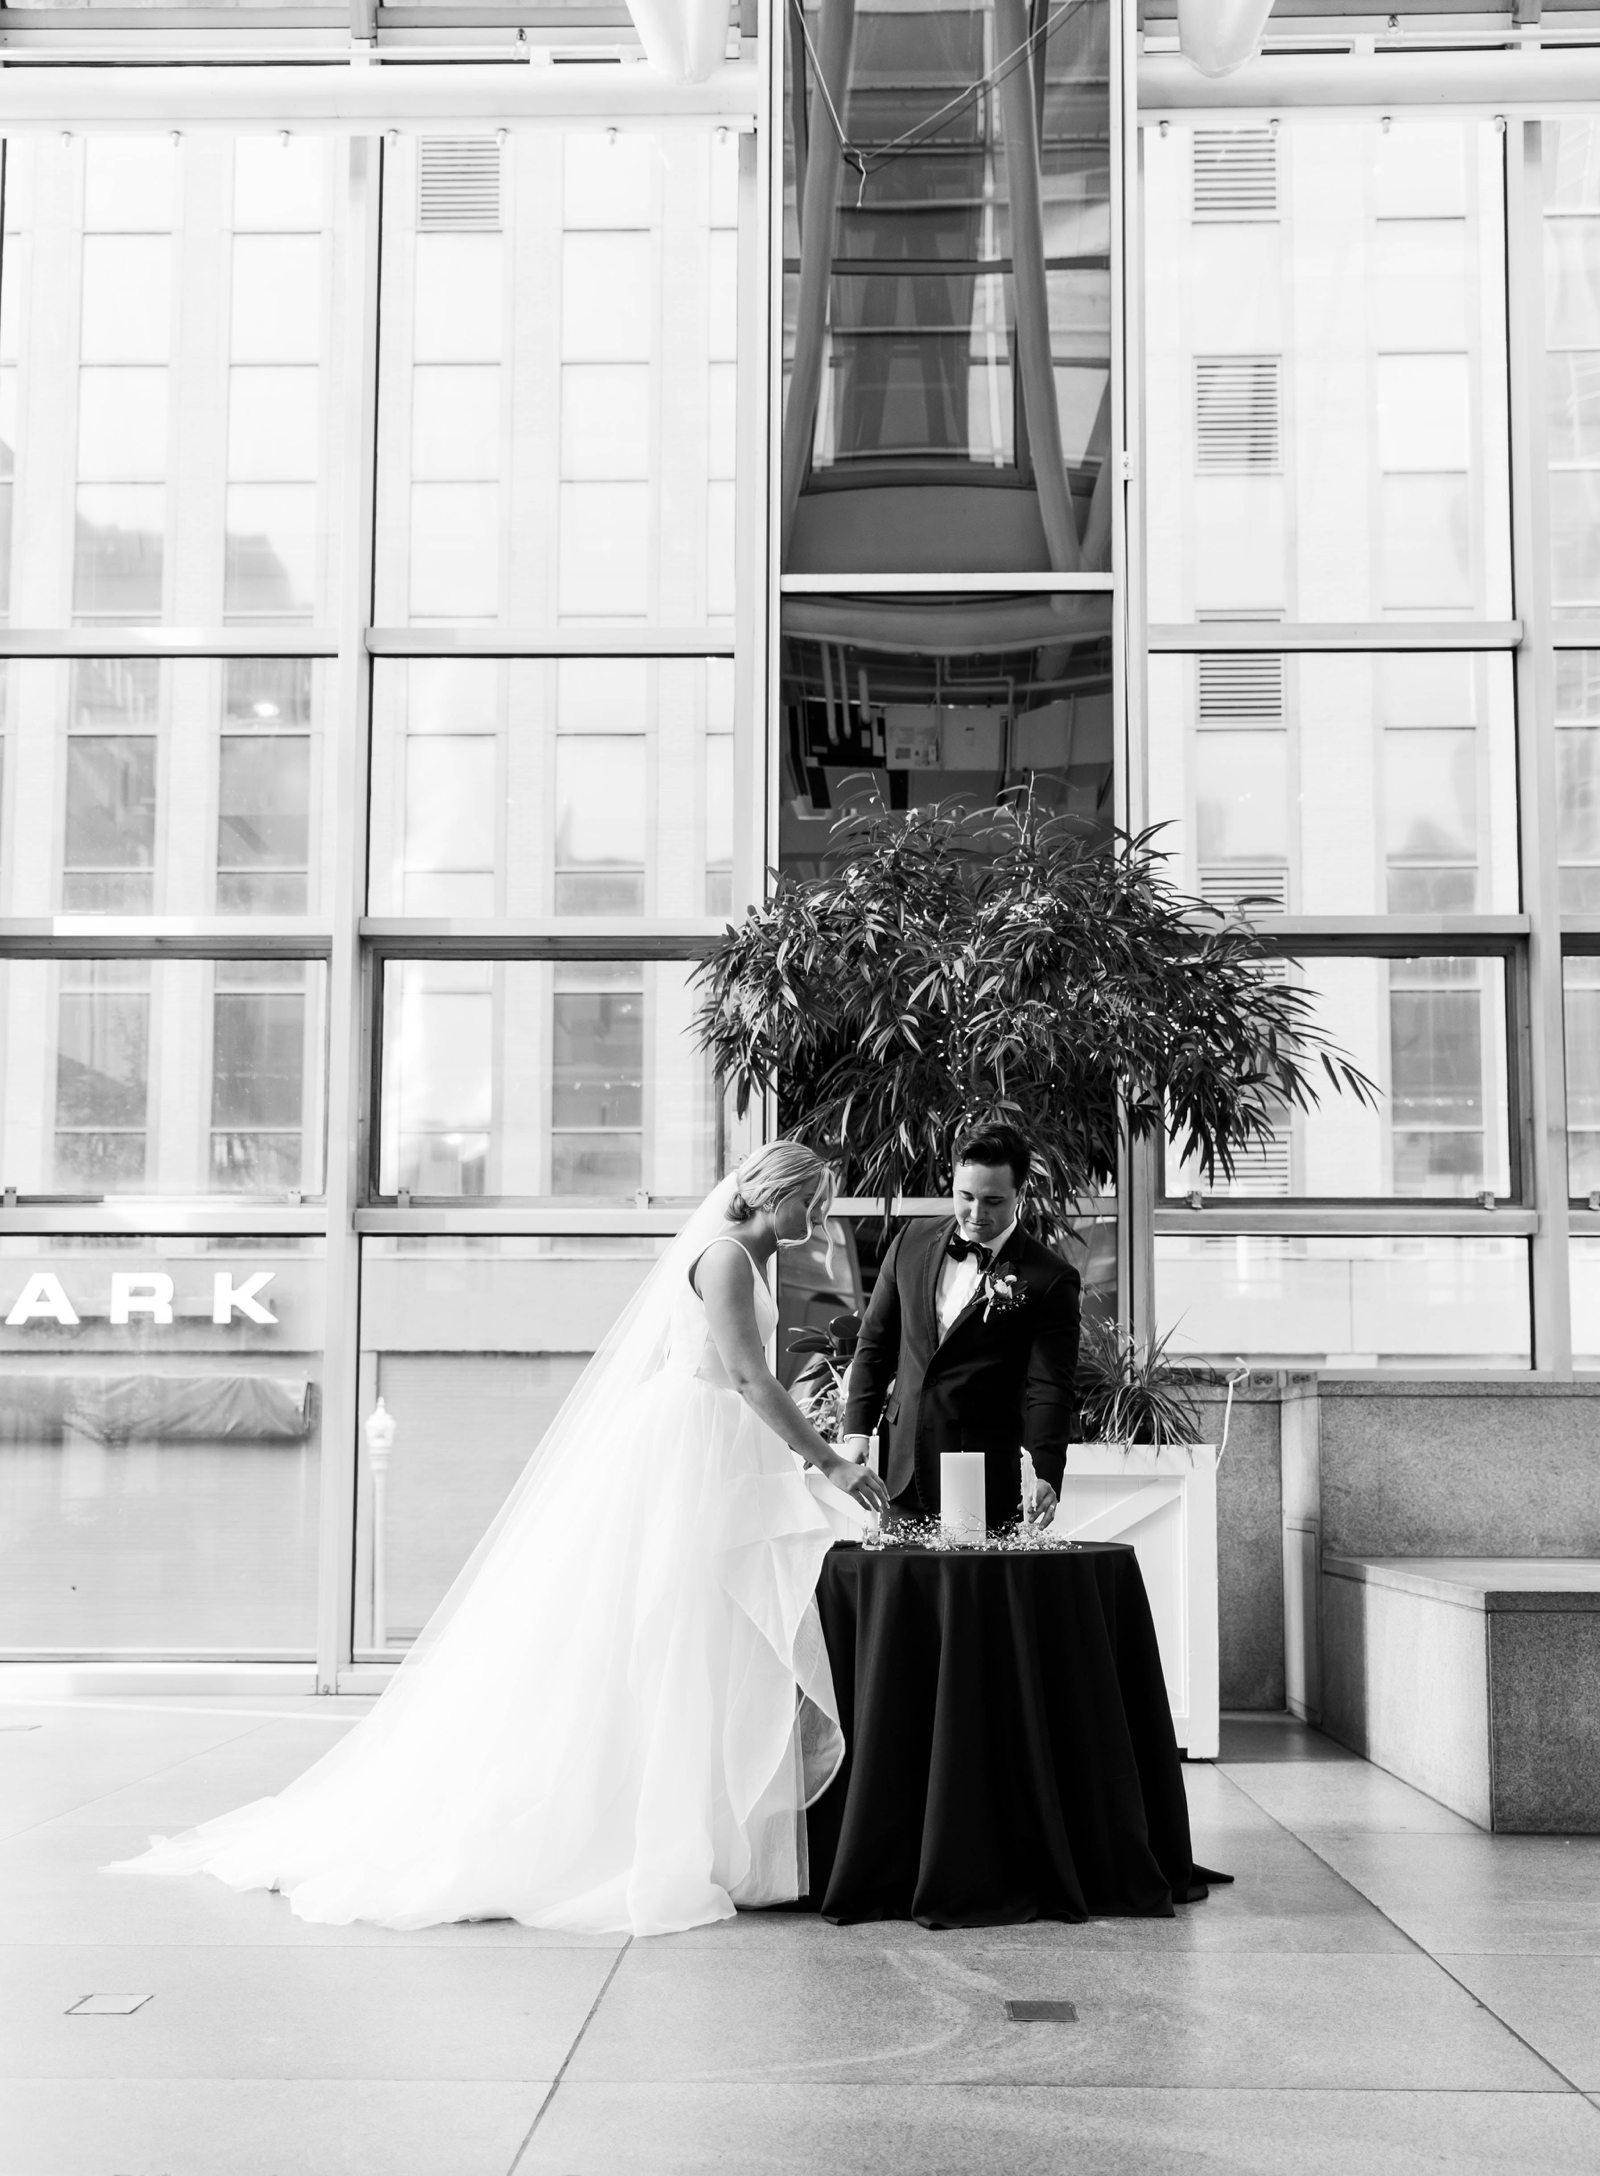 Wintergarden at PPG Place Wedding Venue; Black and white wedding design